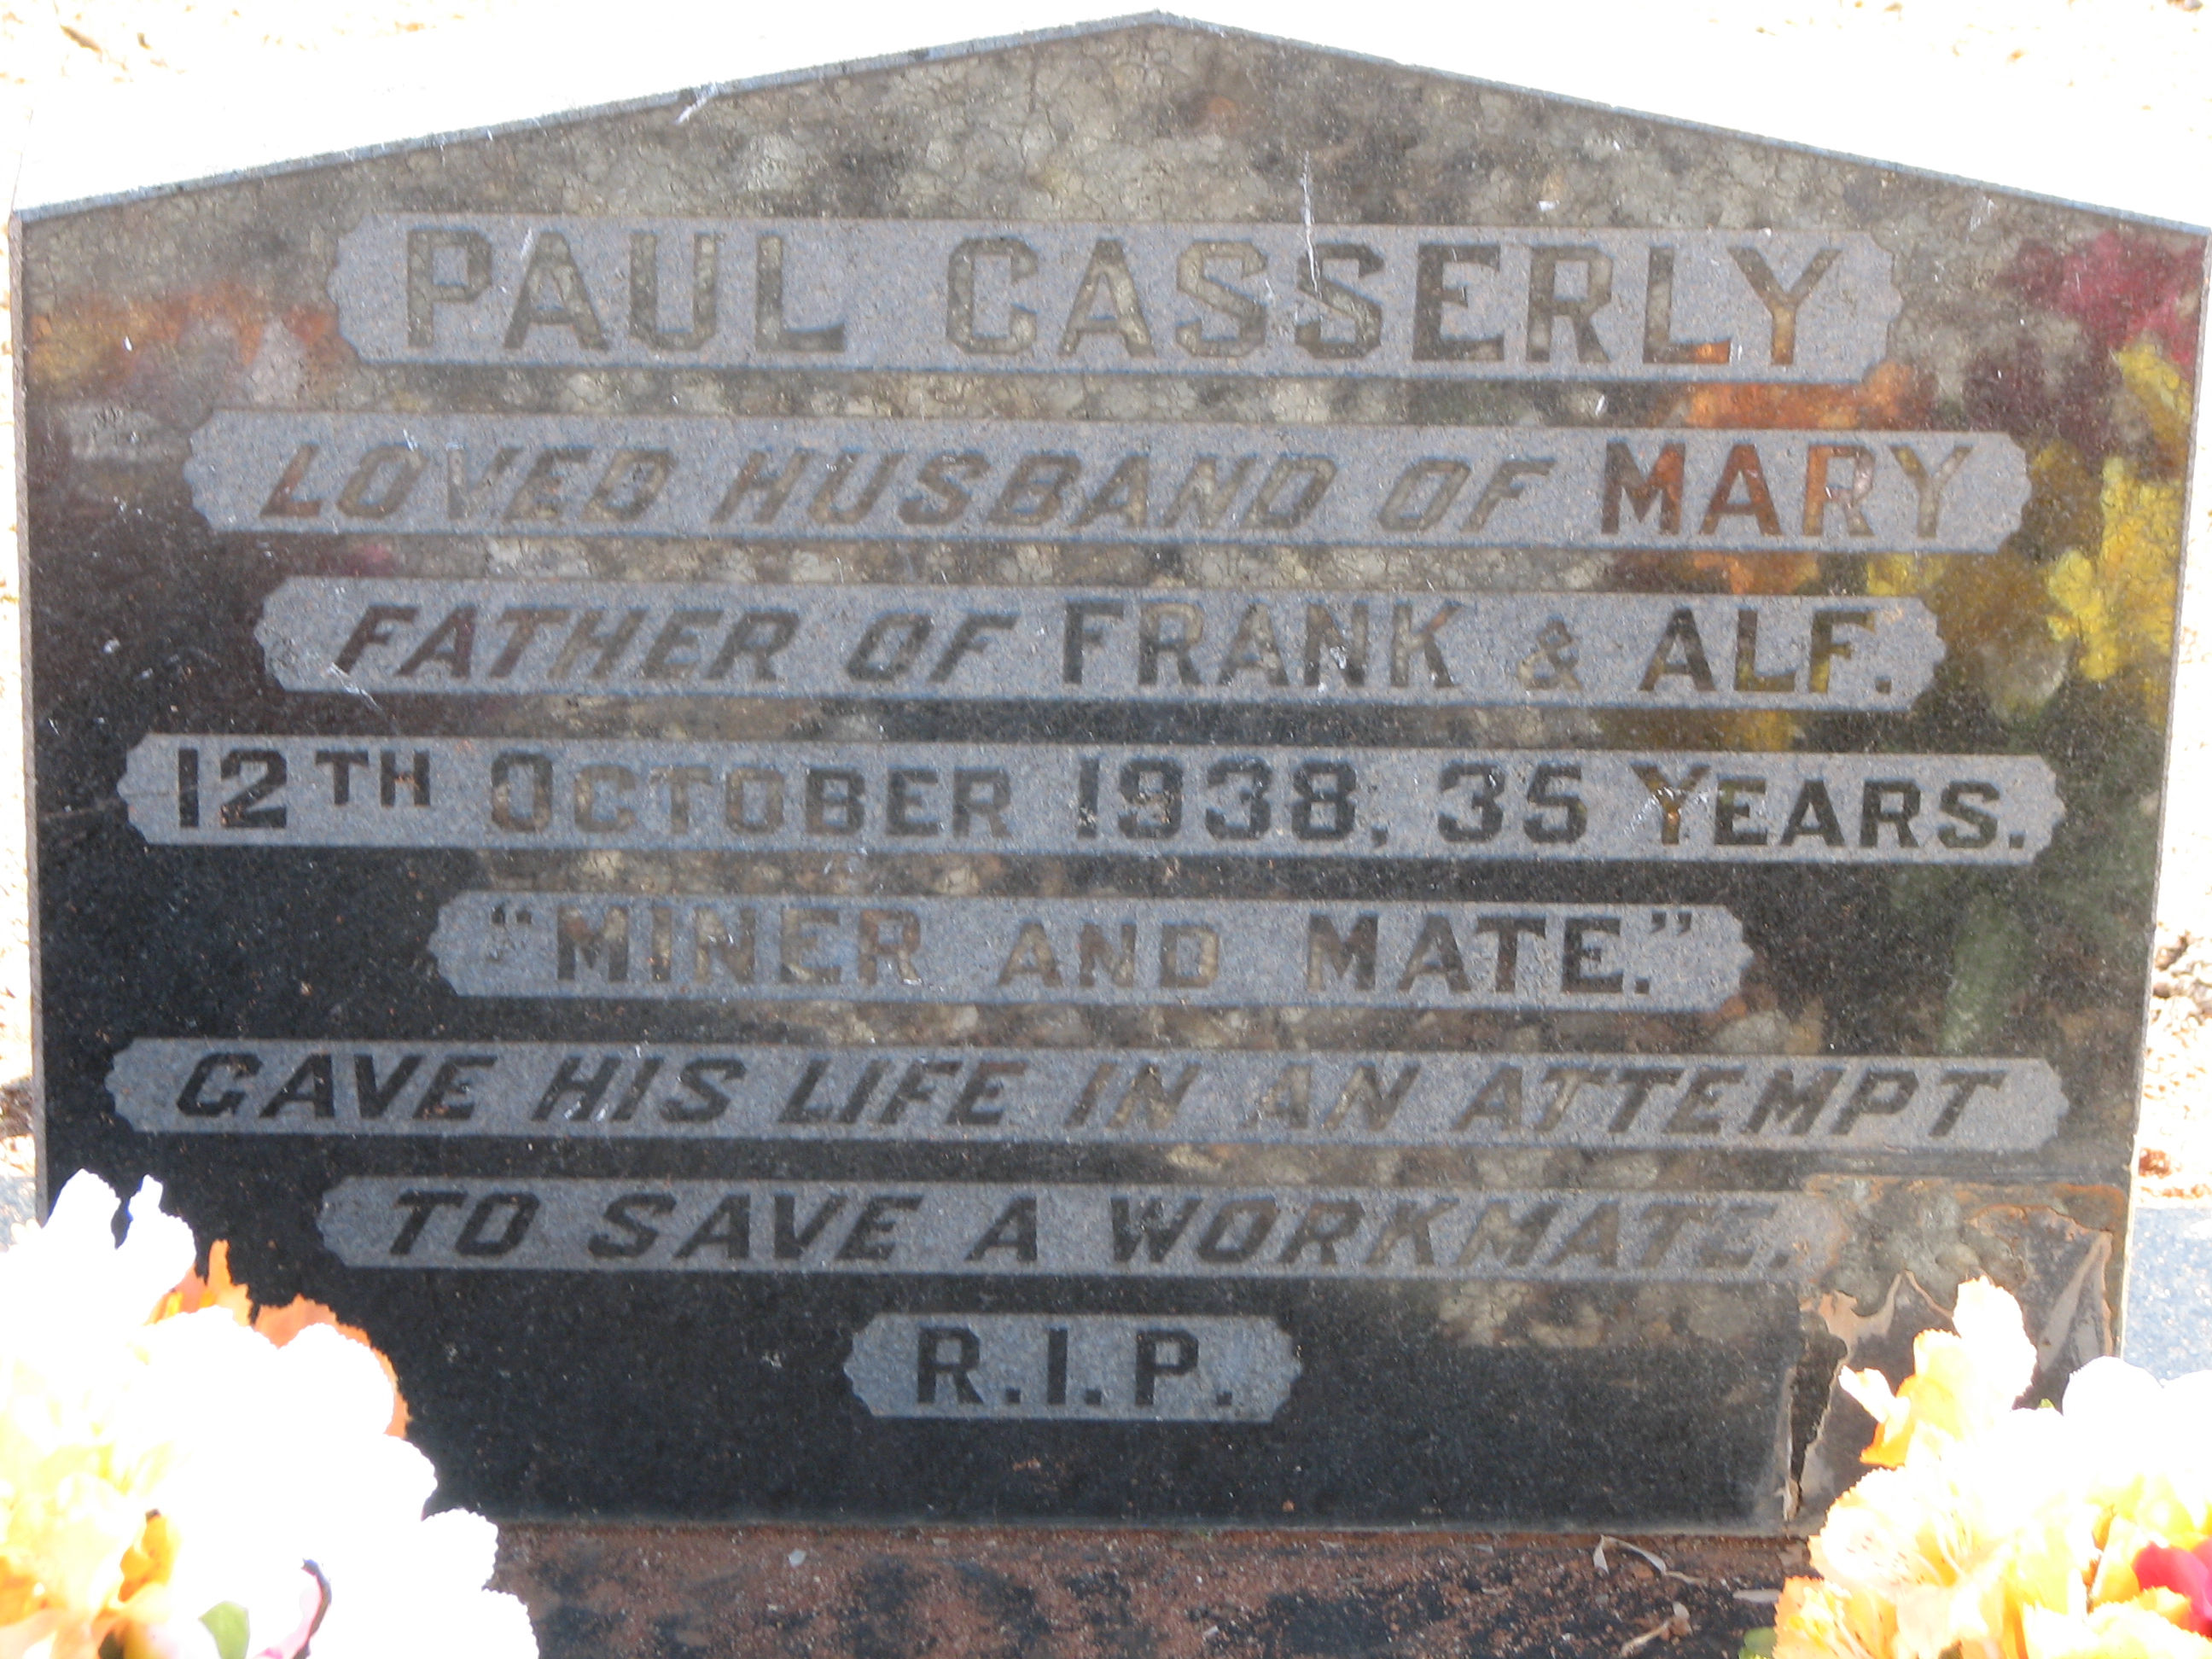 Paul Casserly Headstone - Southern Cross.